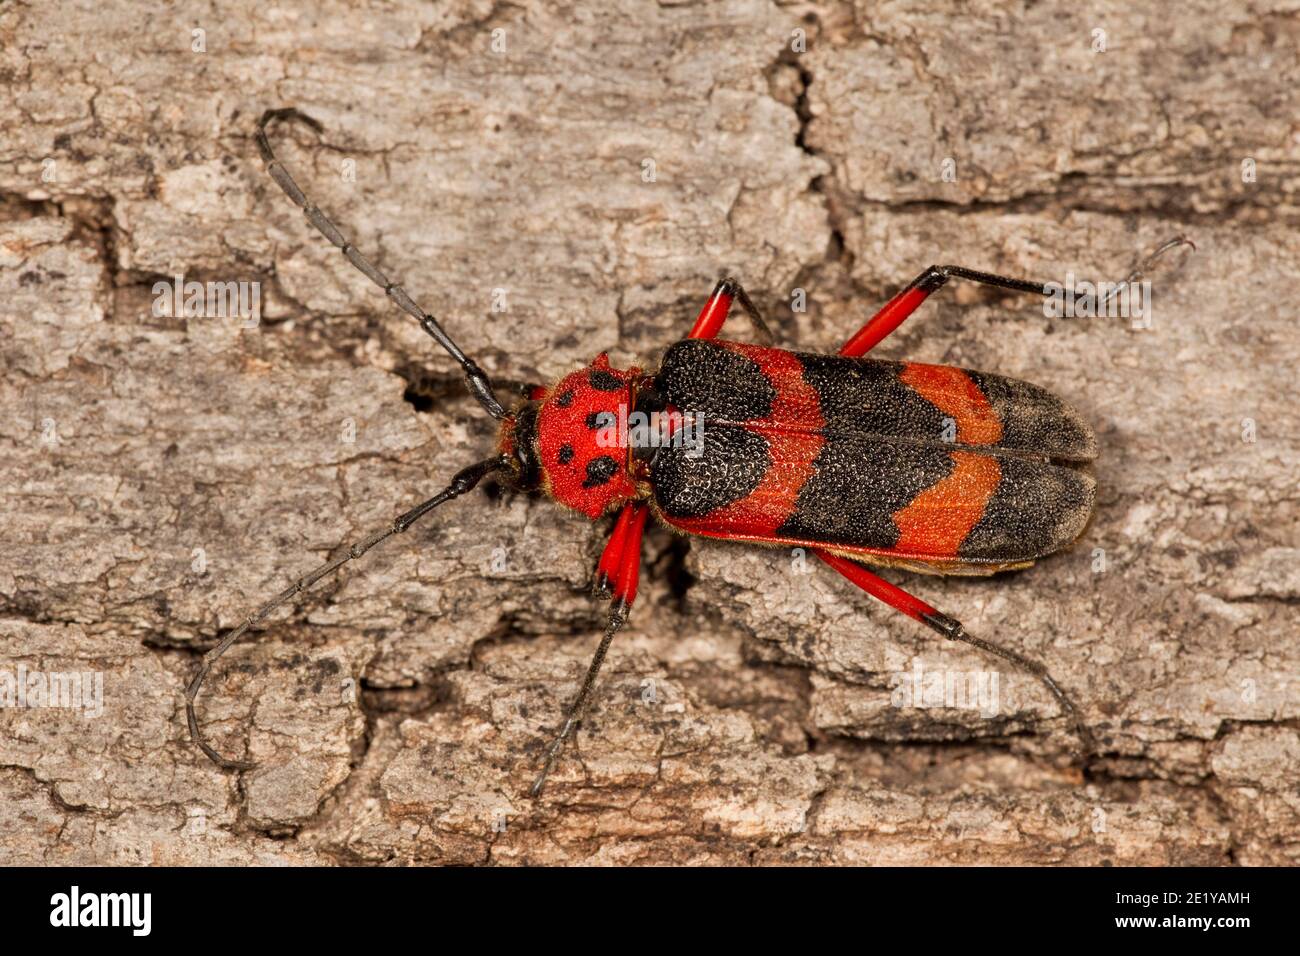 Texas Canyon Longhorn Beetle, Megapurpuricenus magnificus, Cerambycidae. Length 37 mm. Stock Photo